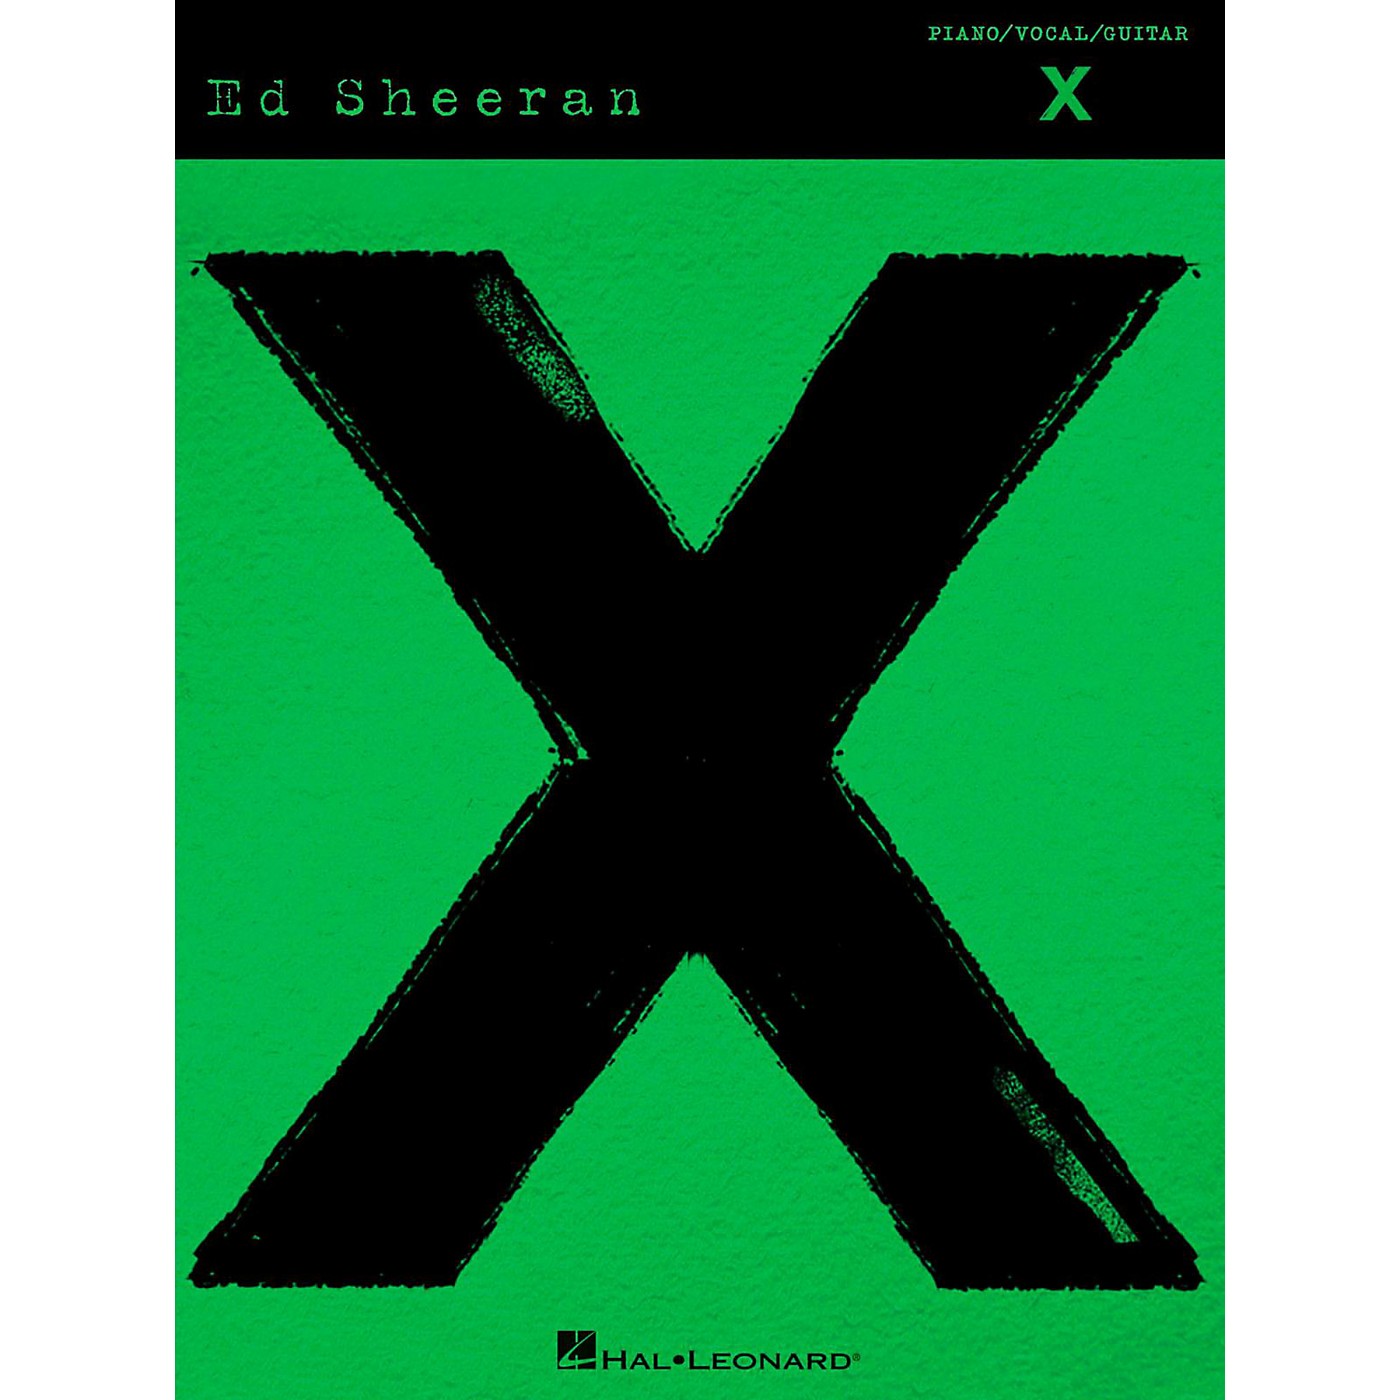 Hal Leonard Ed Sheeran - X Piano/Vocal/Guitar thumbnail